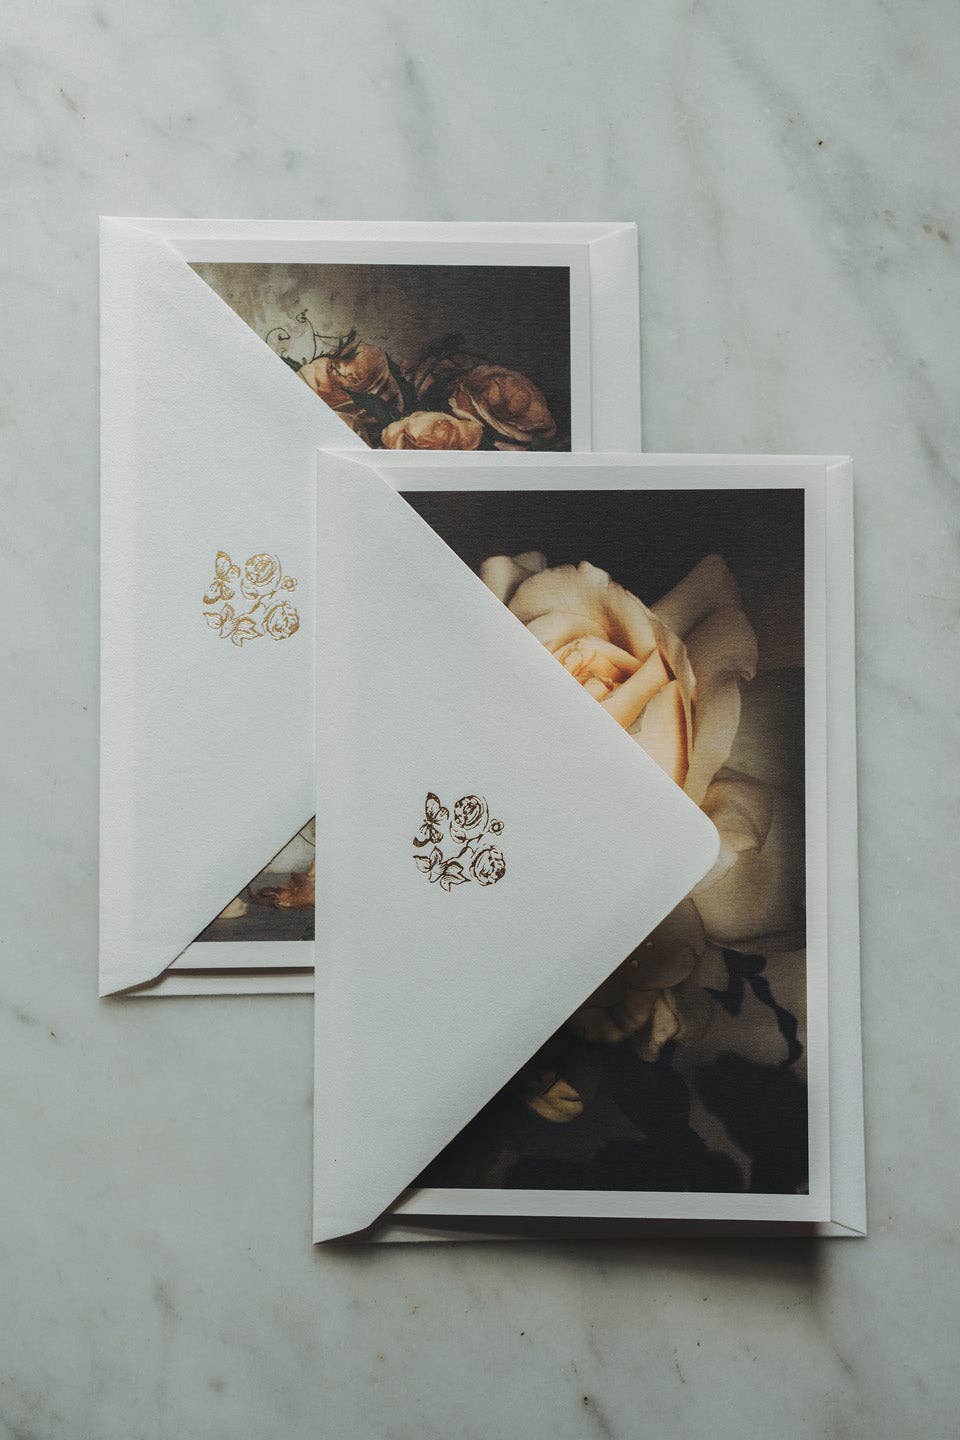 Set of 10 French Artisan Printed Cards - May Roses